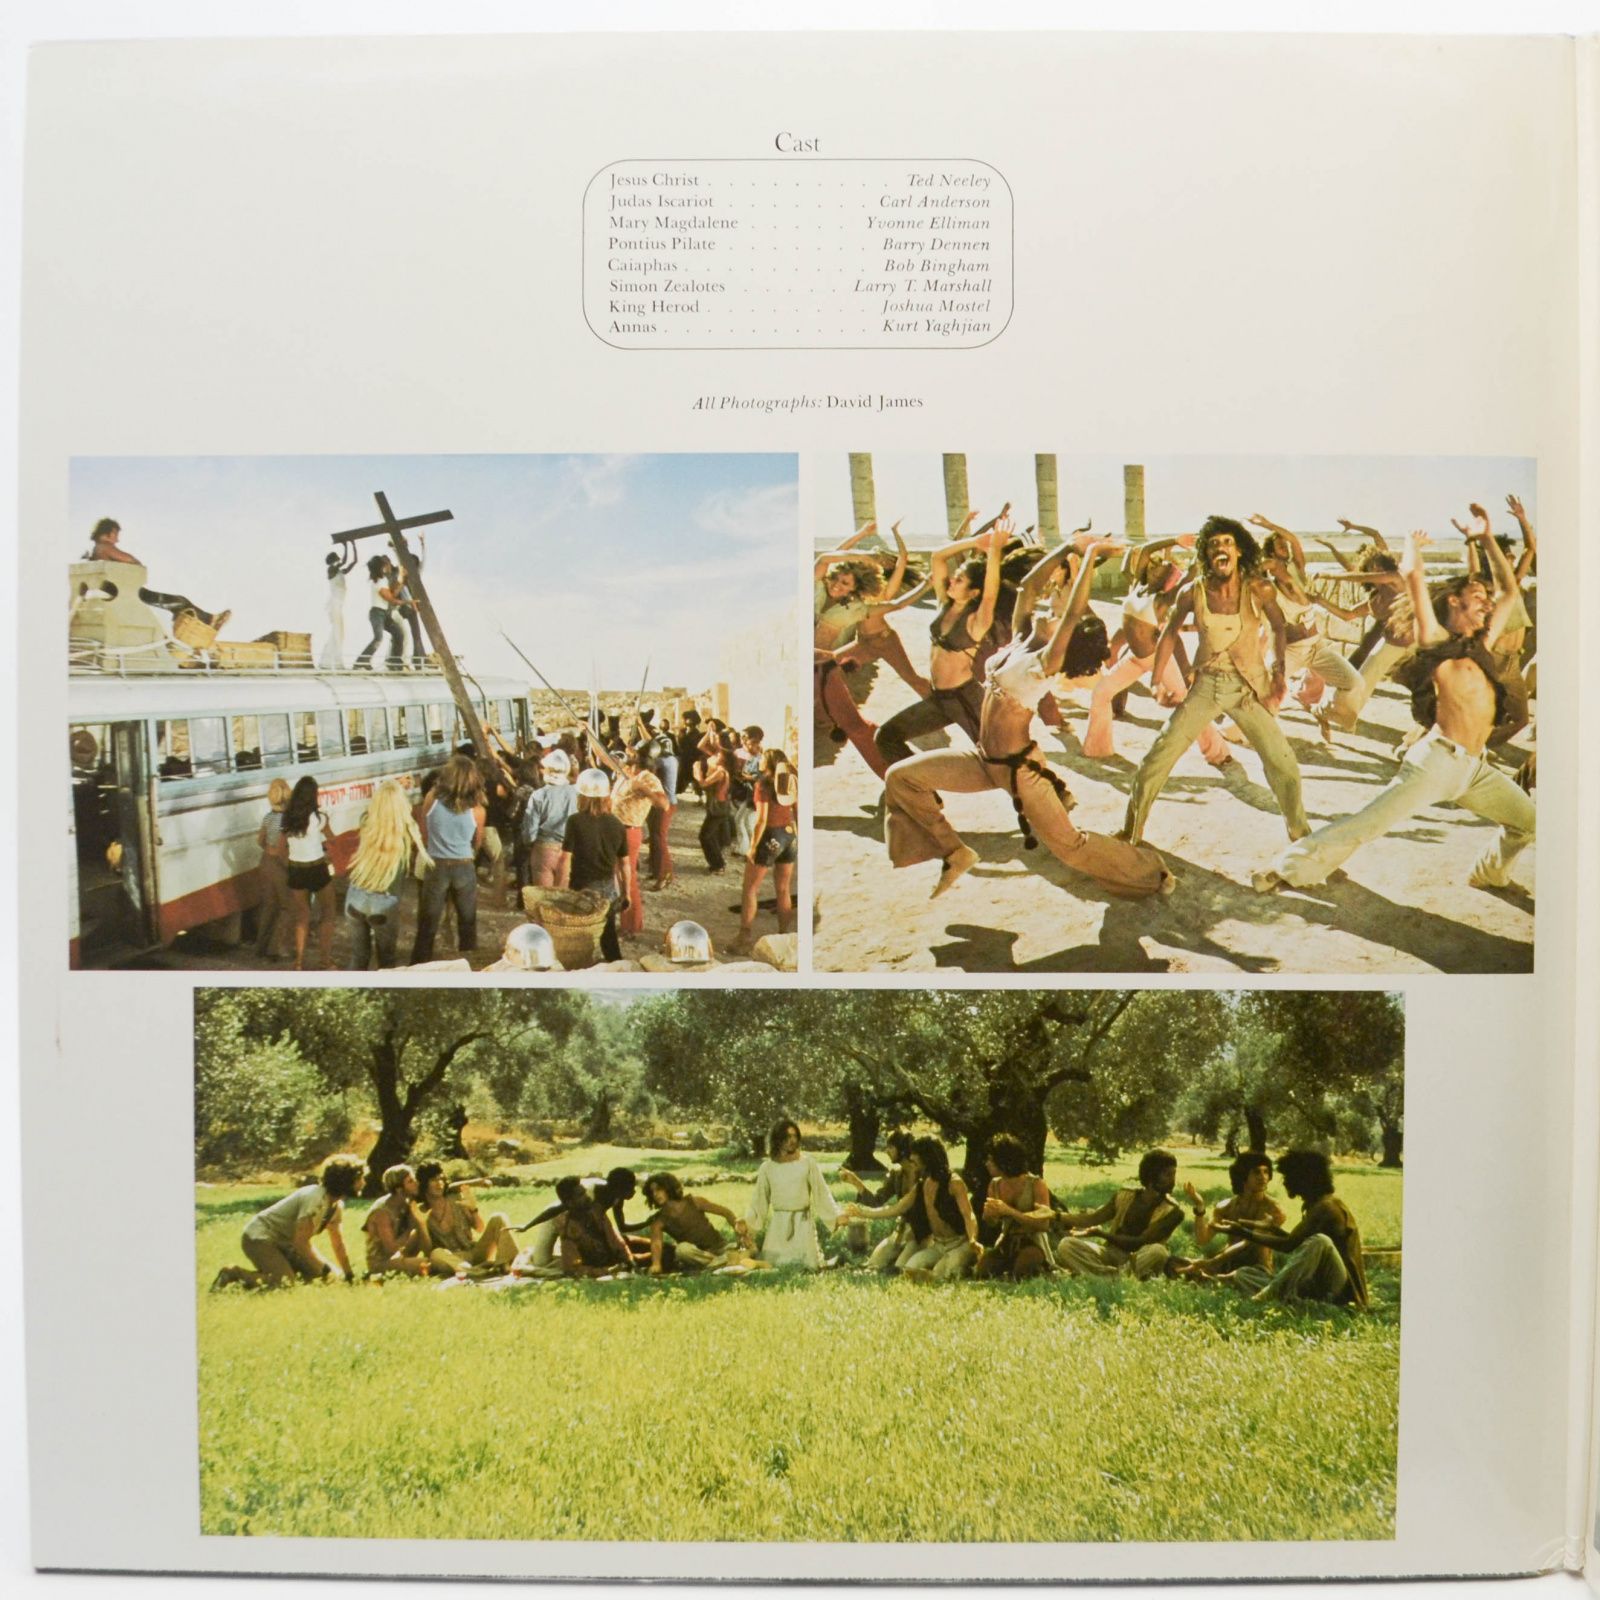 Various — Jesus Christ Superstar (The Original Motion Picture Sound Track Album) (2LP, booklet), 1973